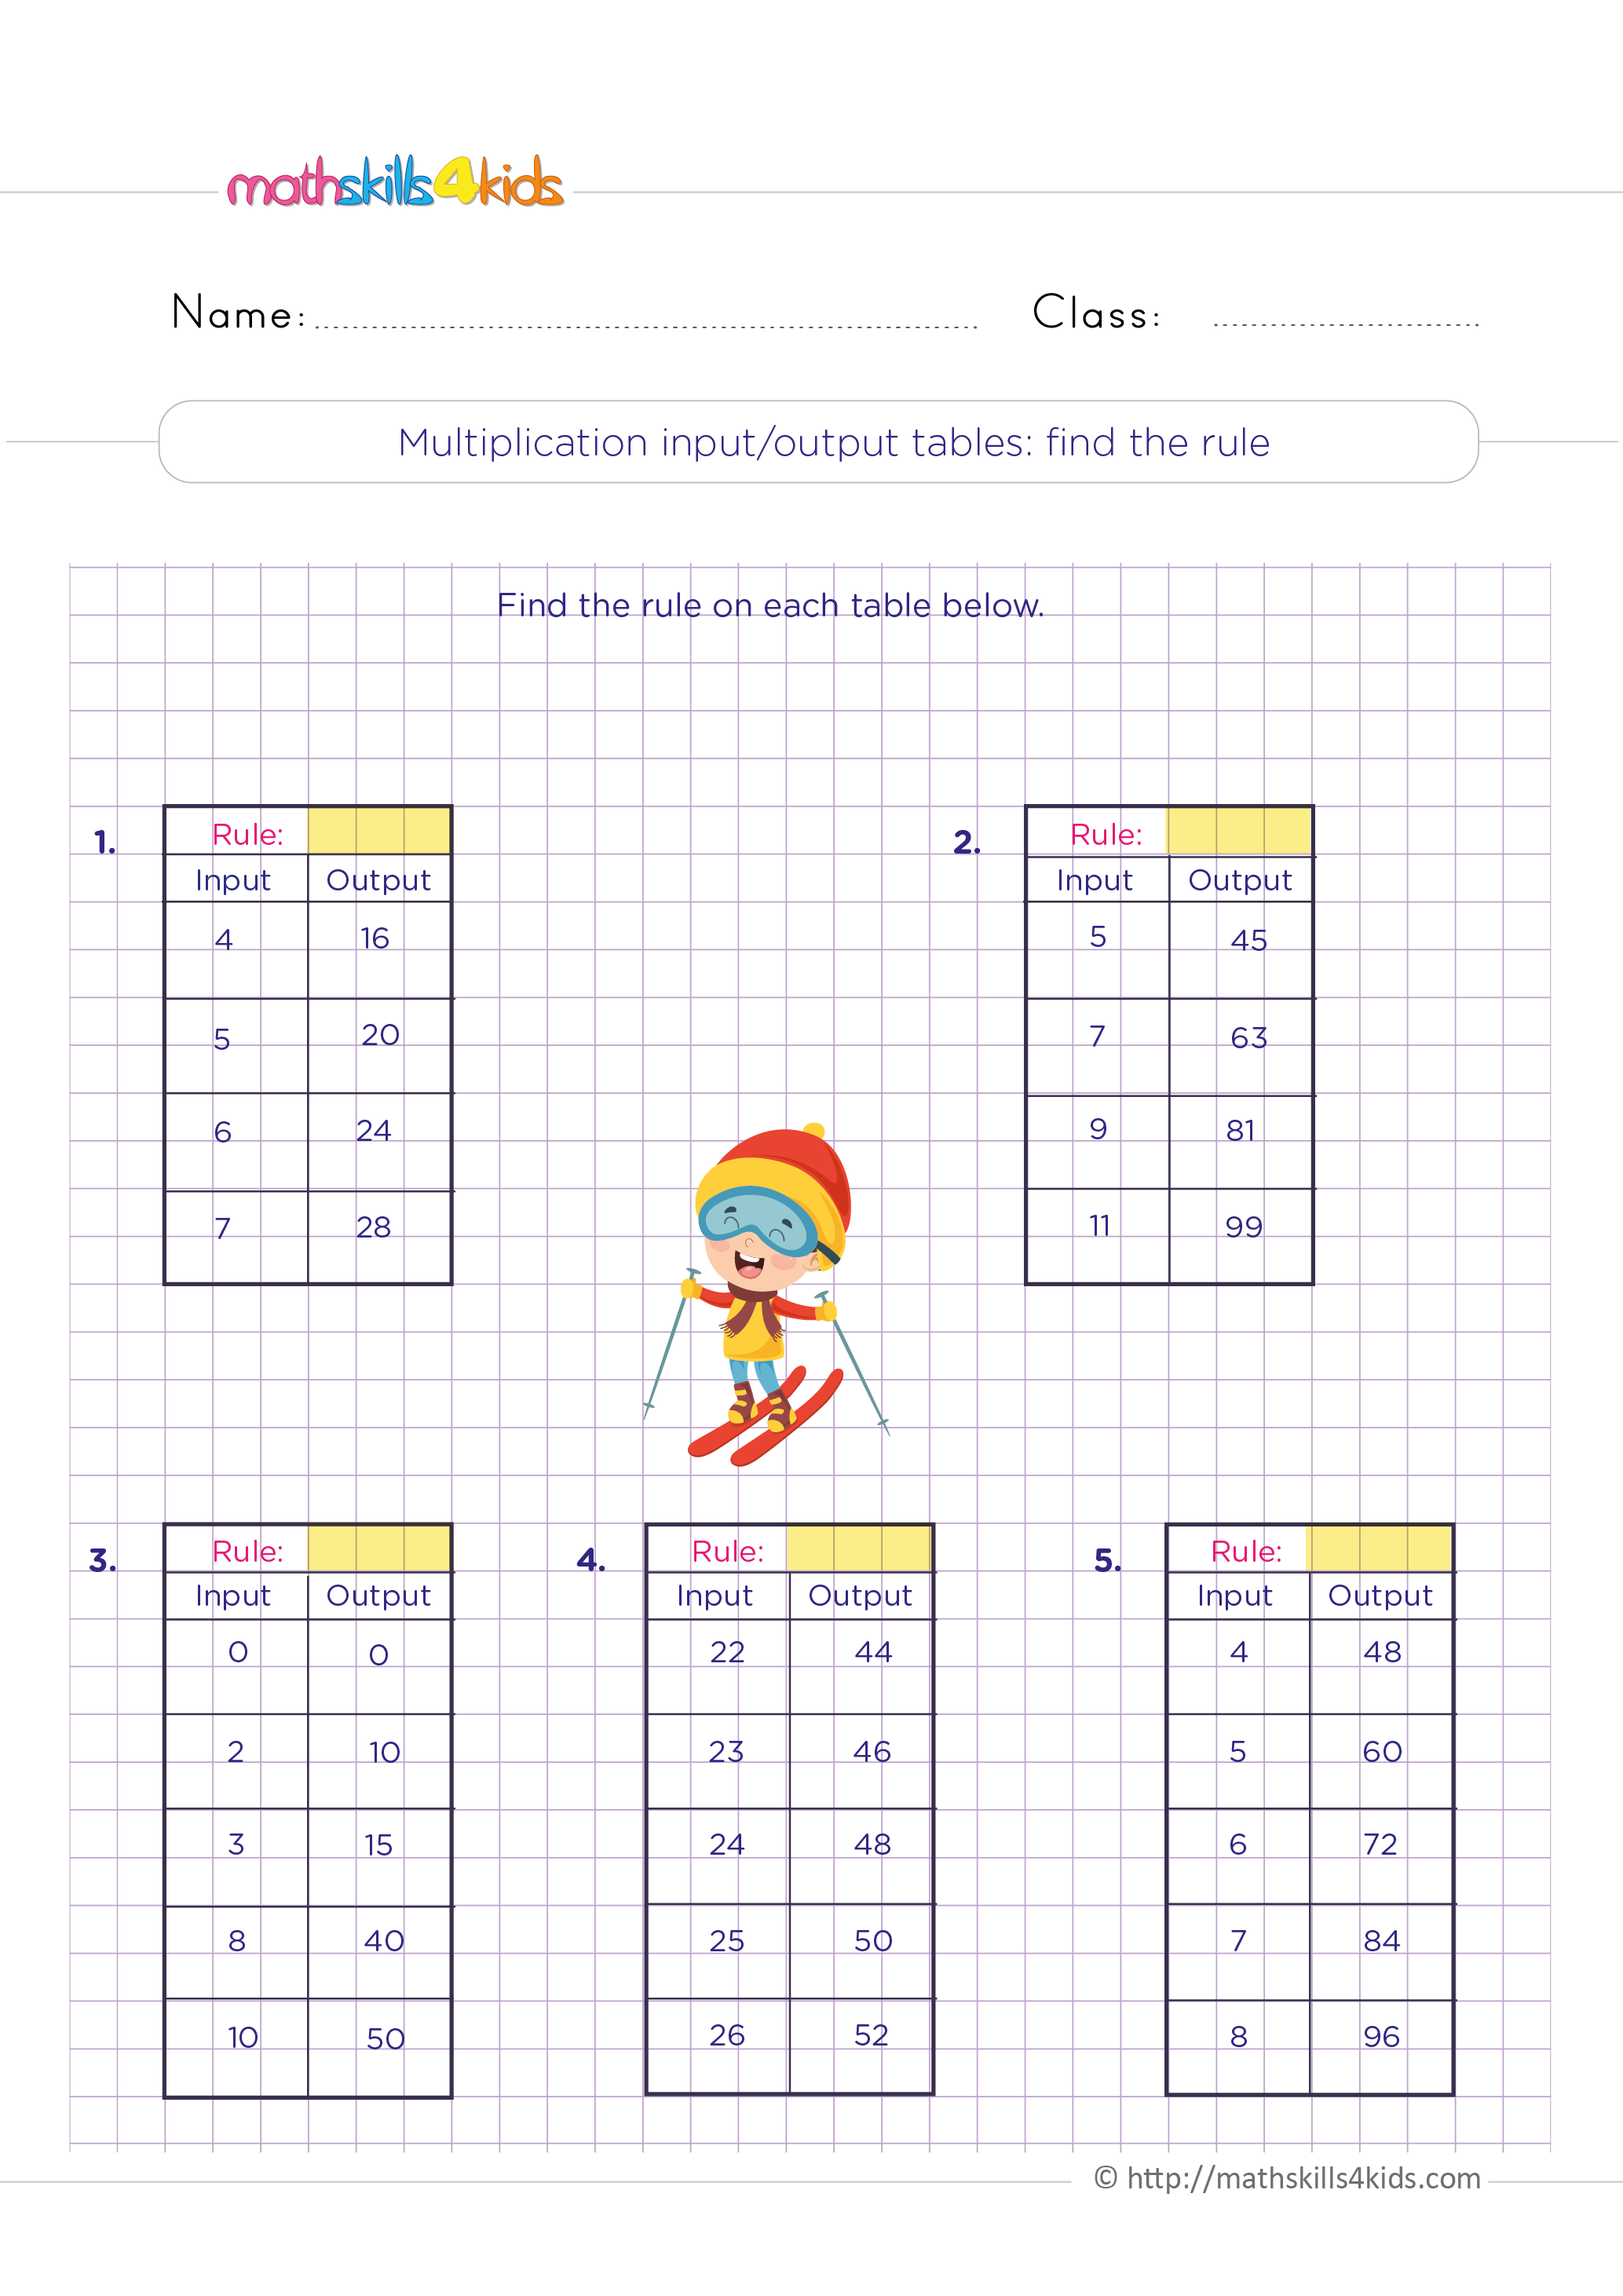 multiplication-worksheets-grade-4-printable-estimate-products-grade-4-worksheets-math